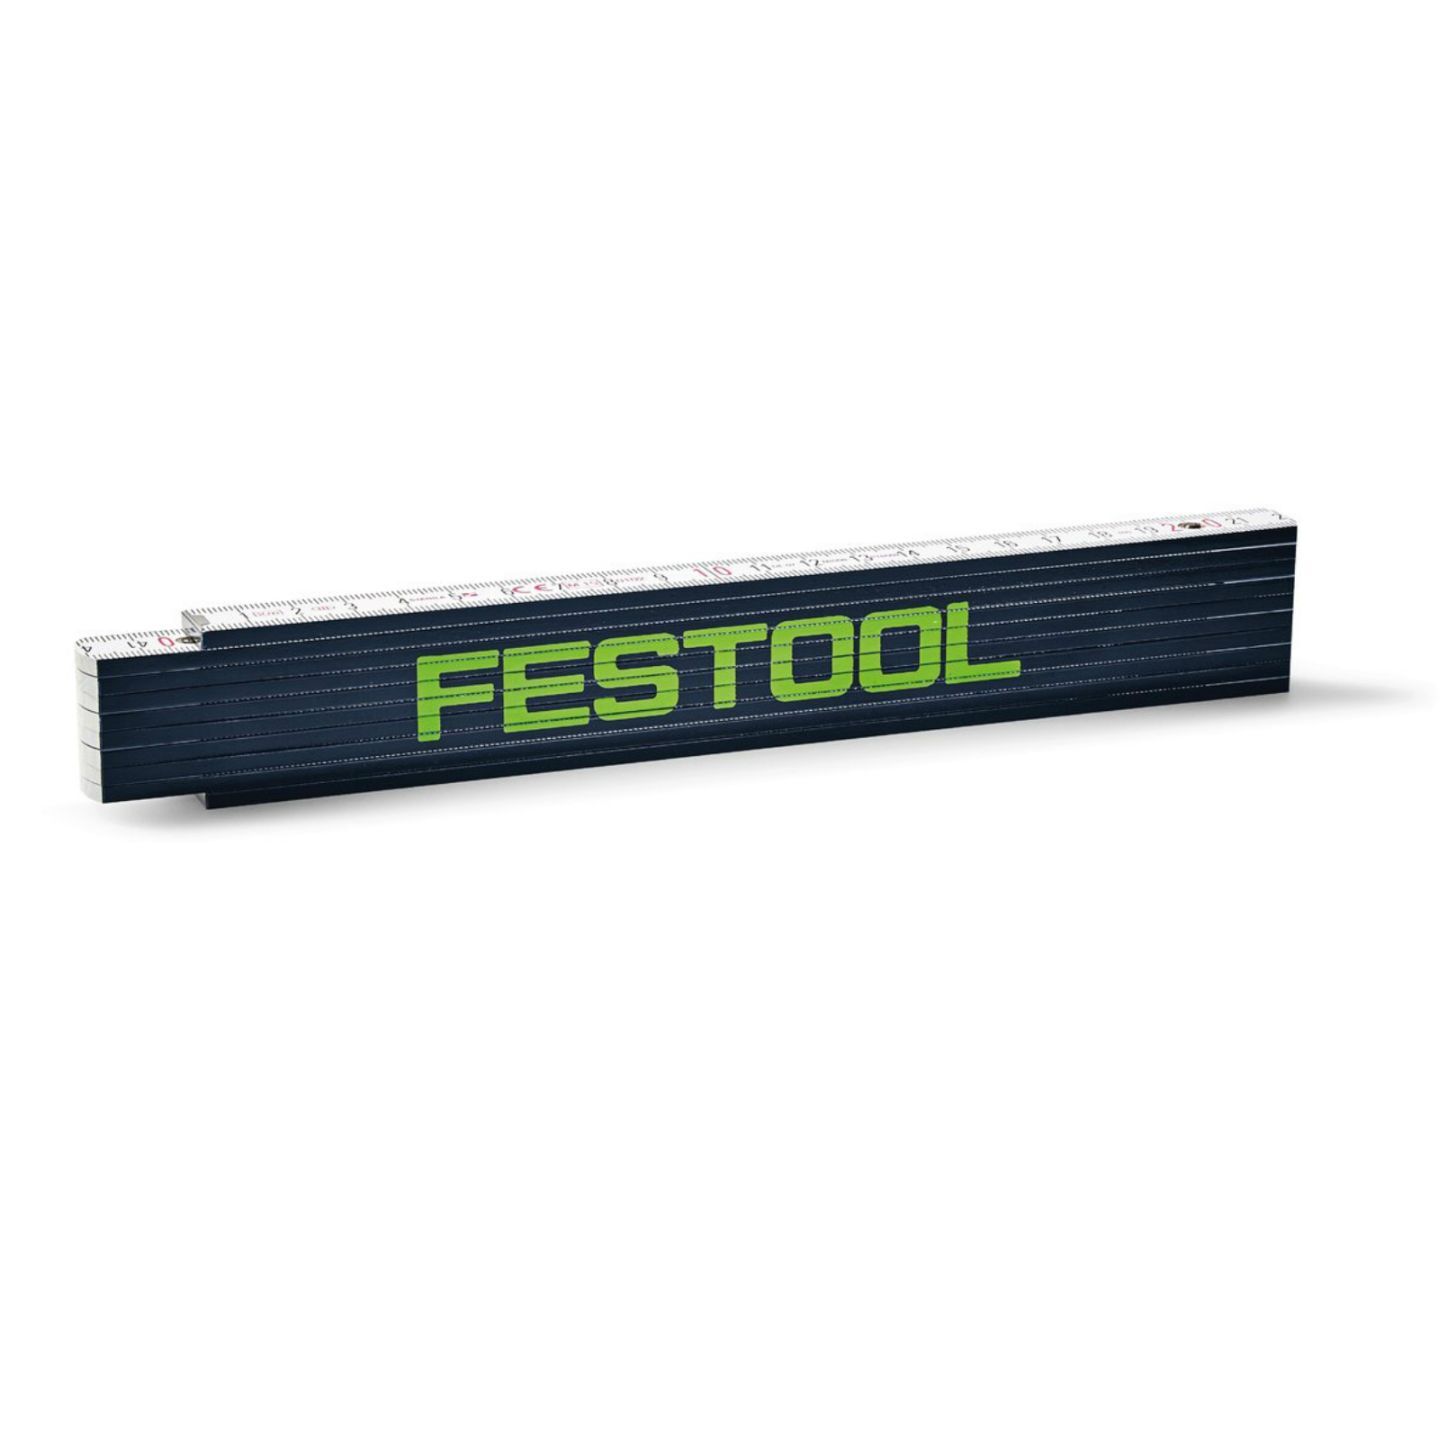 Festool Folding Ruler 2M (201464)